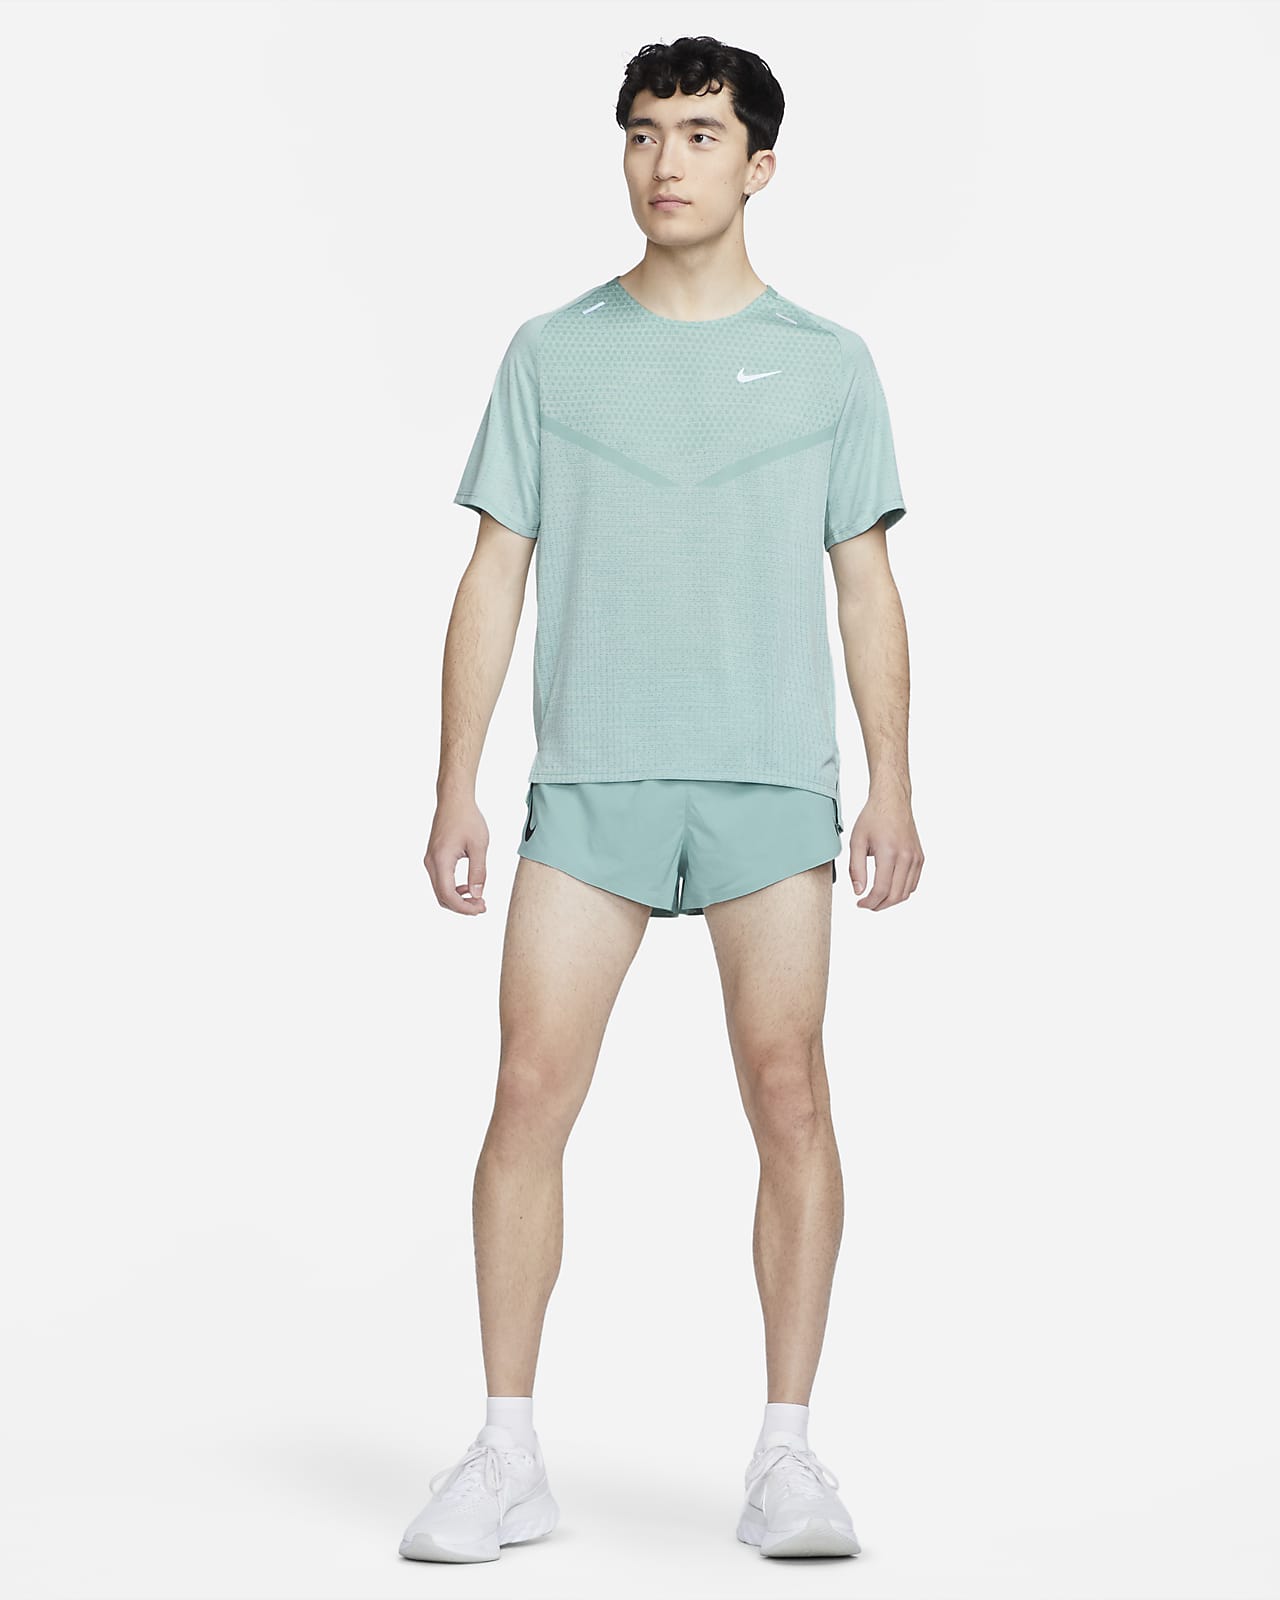 Nike AeroSwift Men's 5cm (approx.) Running Shorts